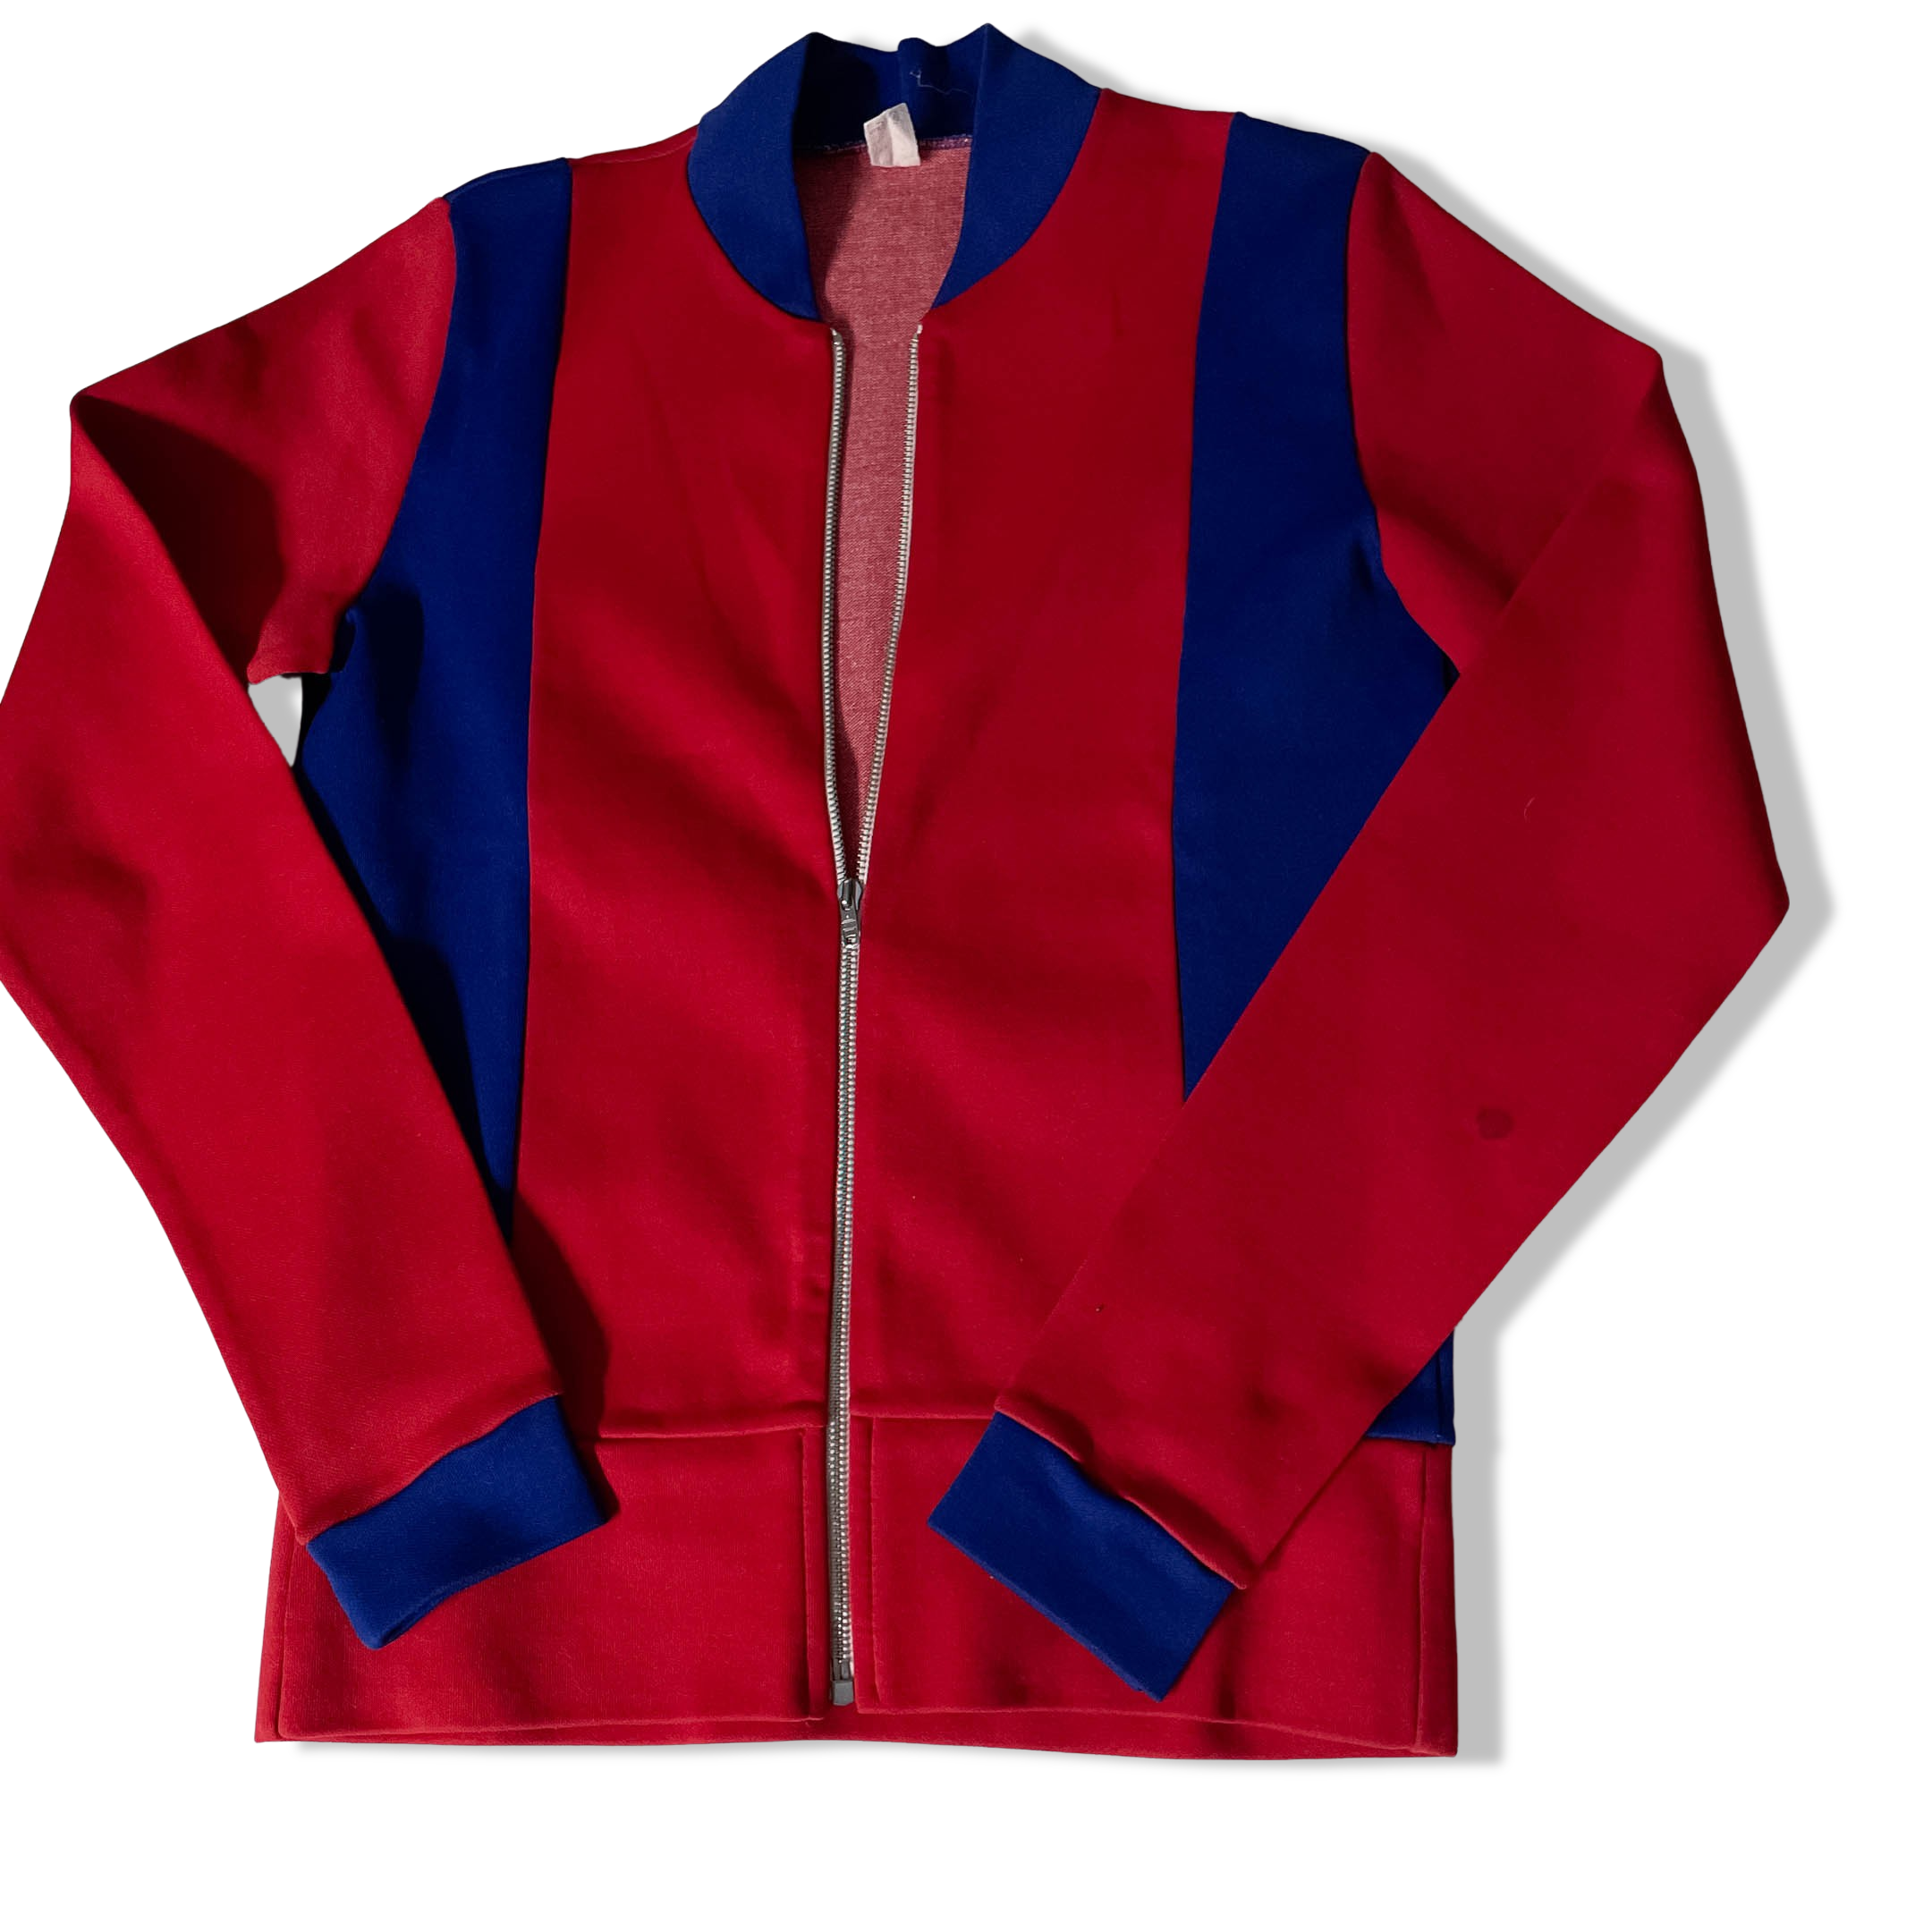 Vintage Red & blue colorblock retro 90's track jacket size M